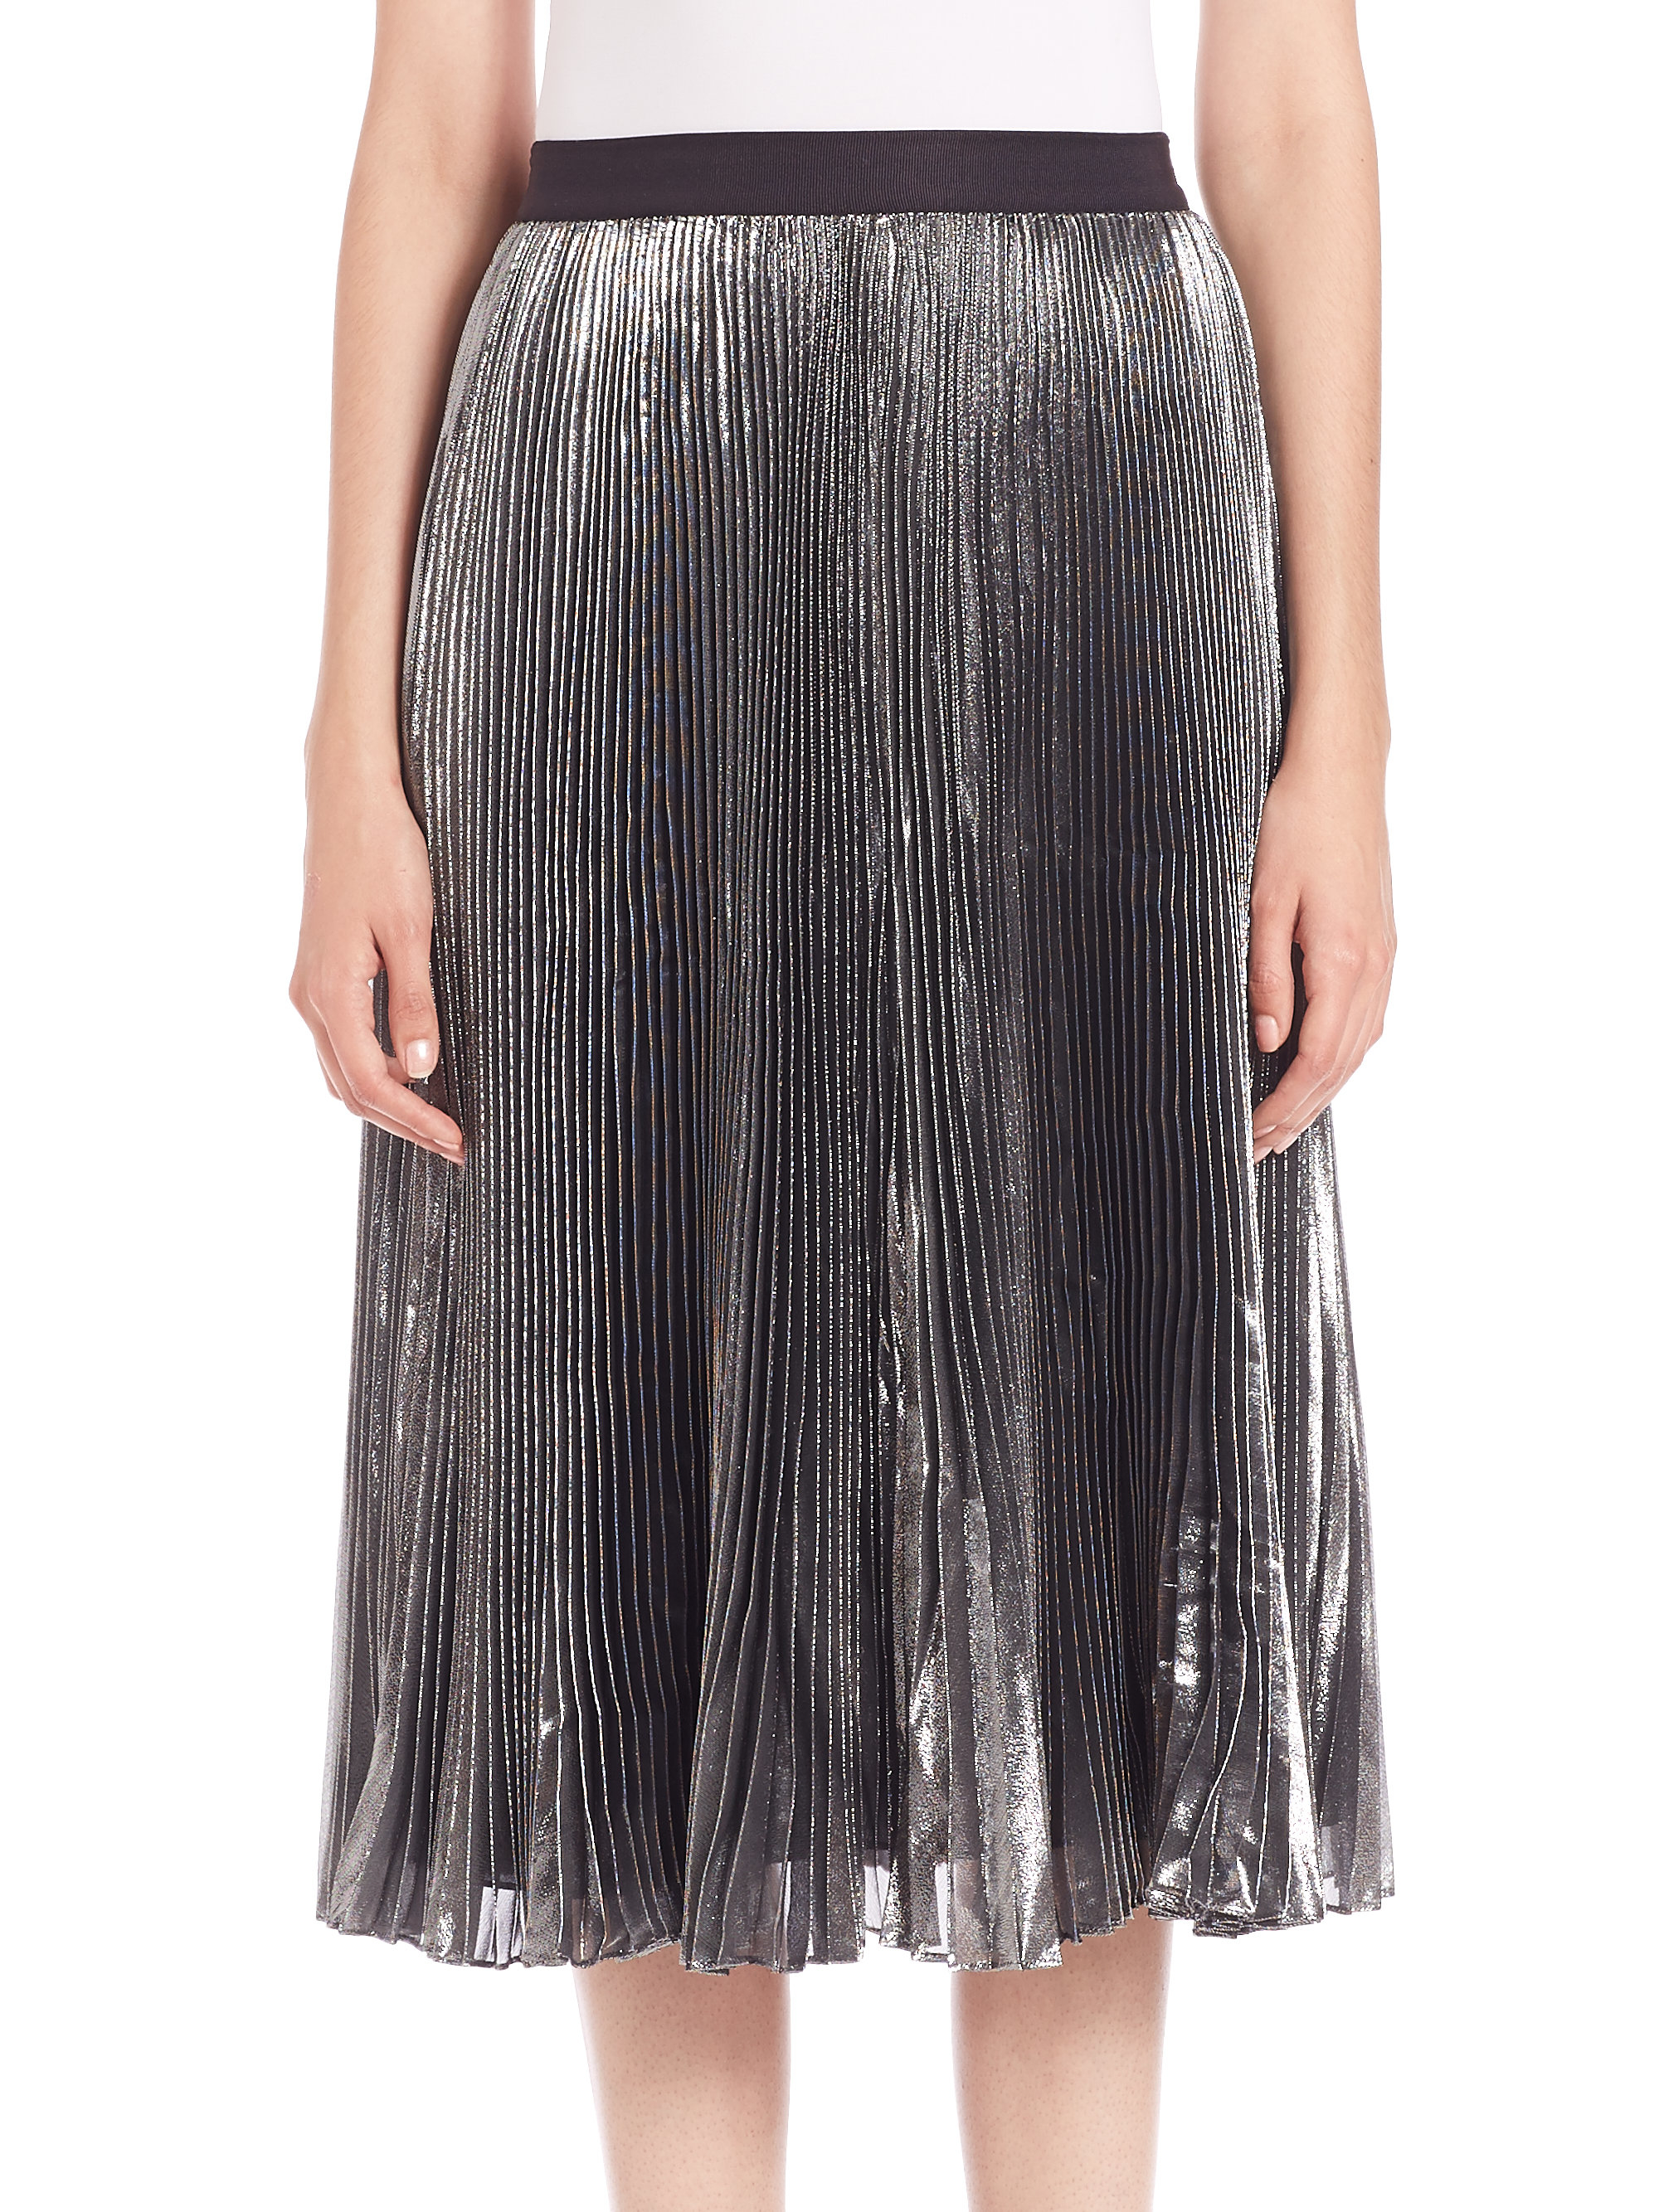 Lyst - Rebecca taylor Pleated Silk & Lurex Skirt in Metallic